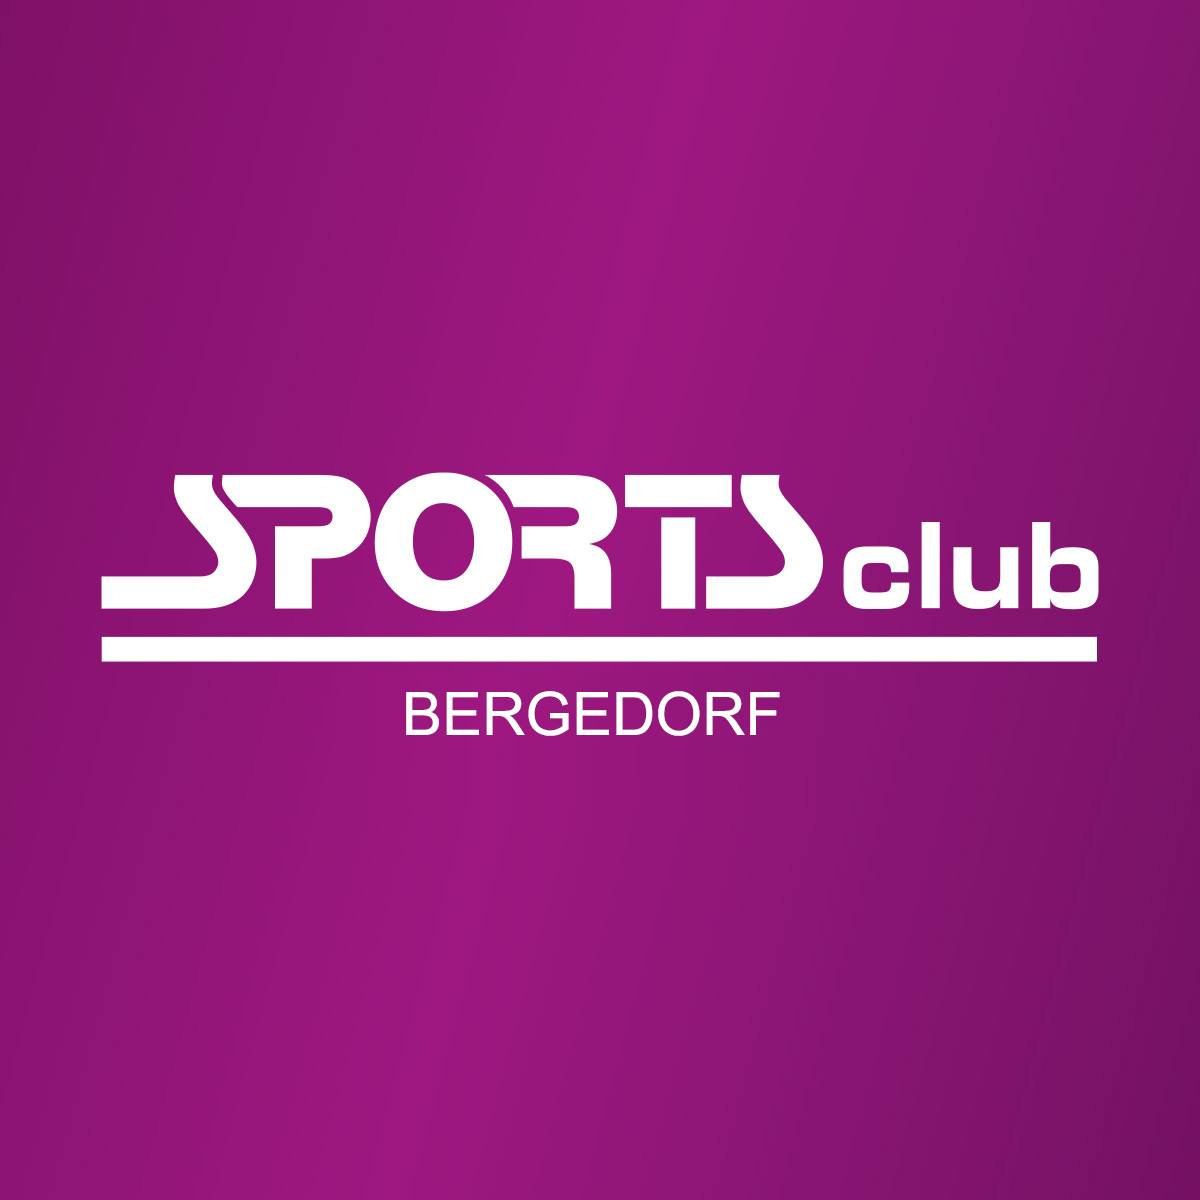 Sportsclub Bergedorf